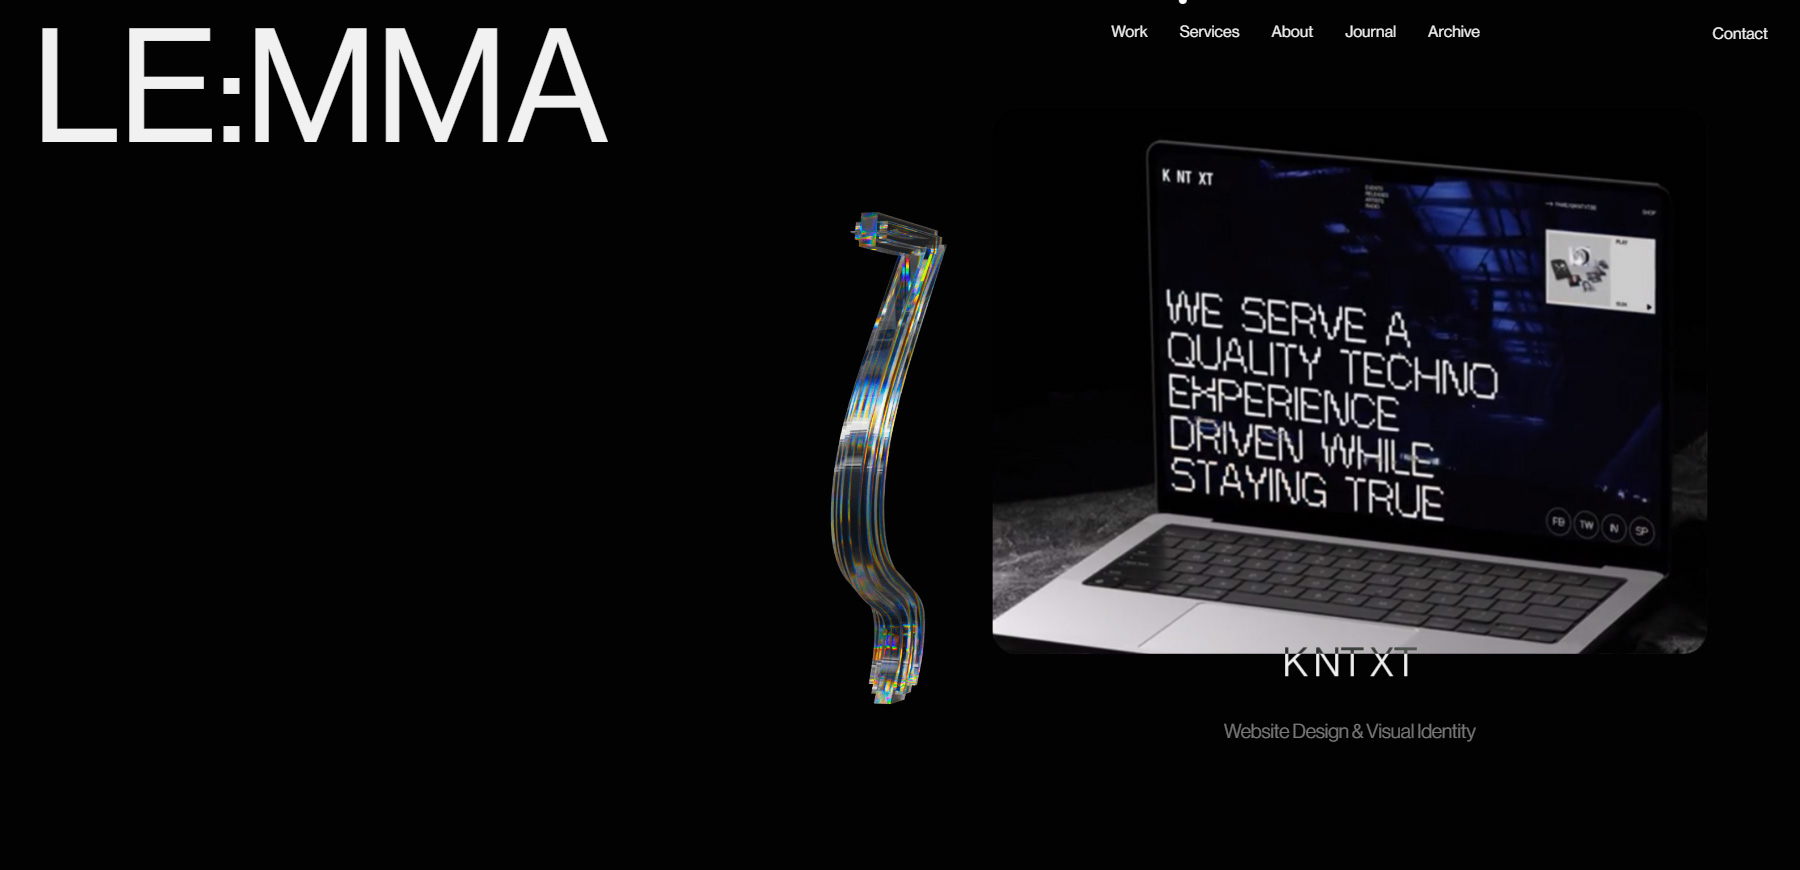 Le:mma Studio - Website of the Day